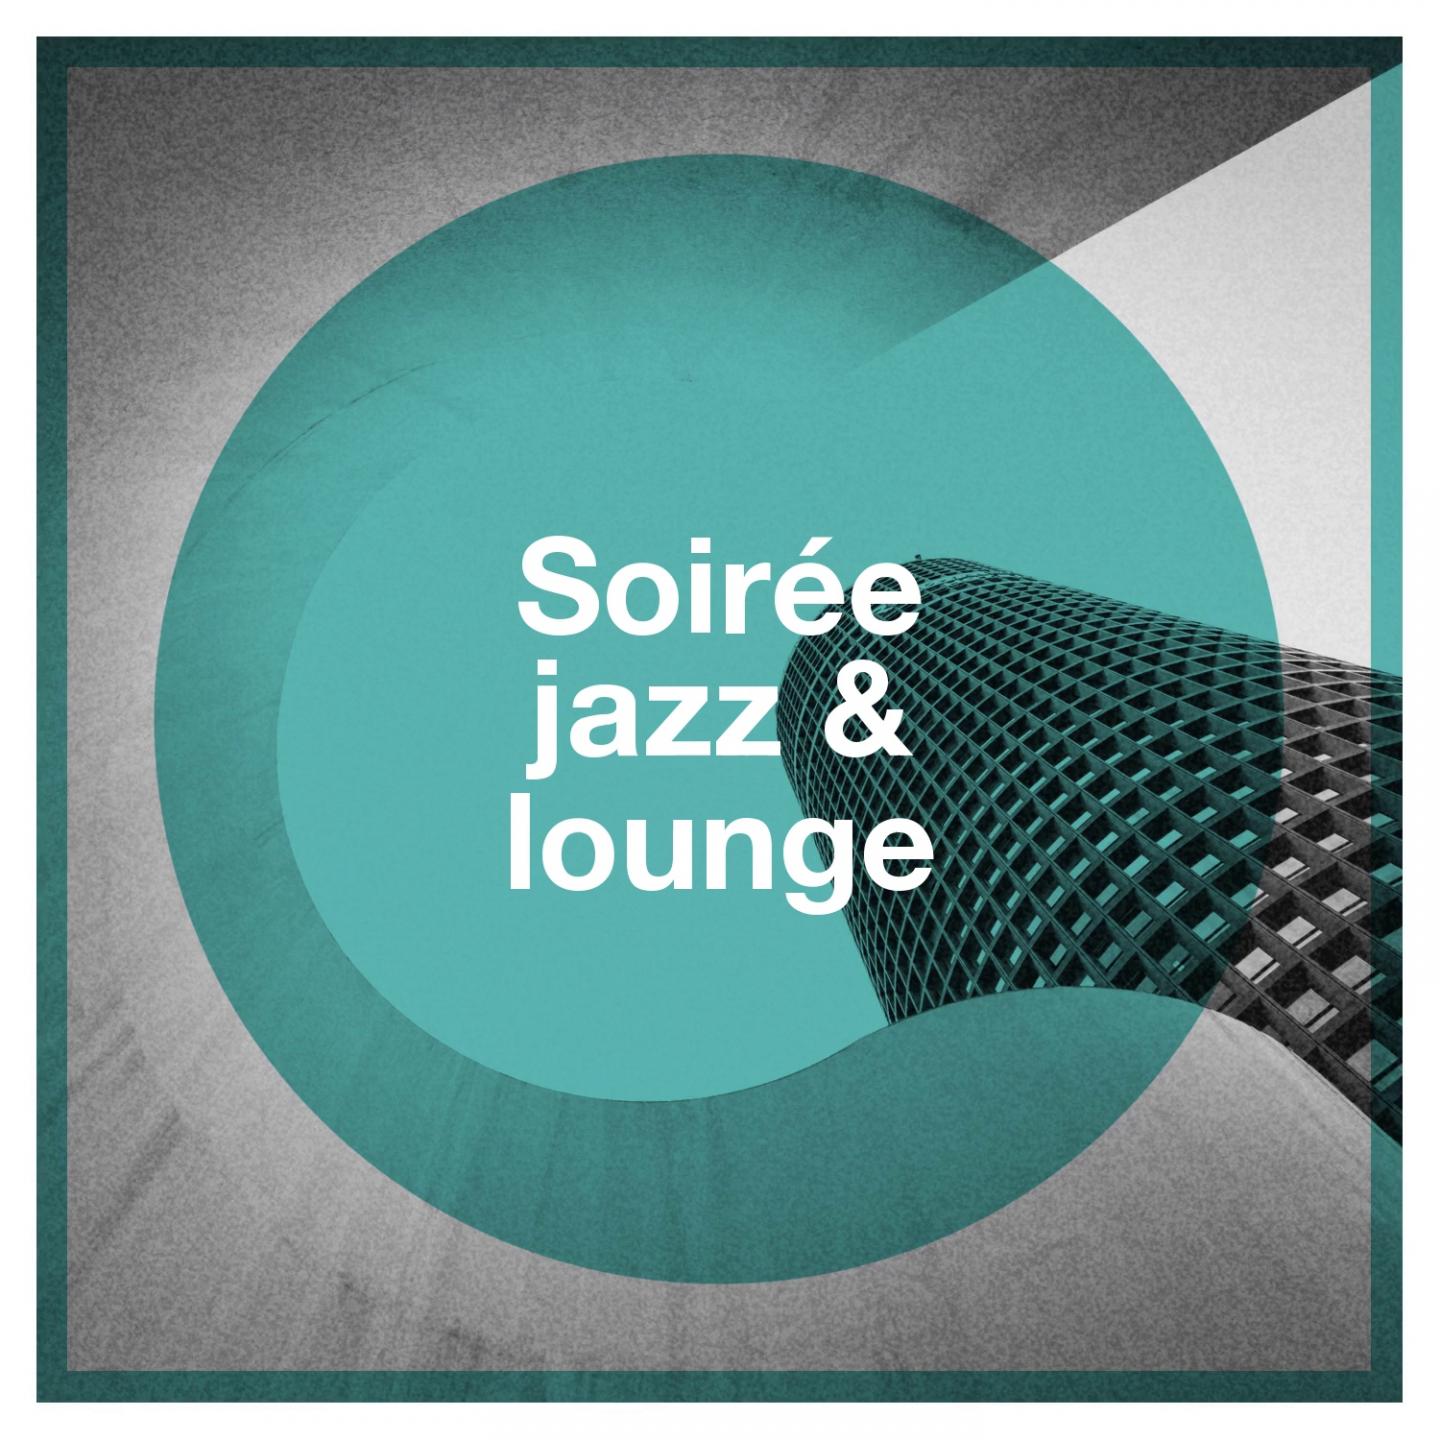 Soire e jazz  lounge